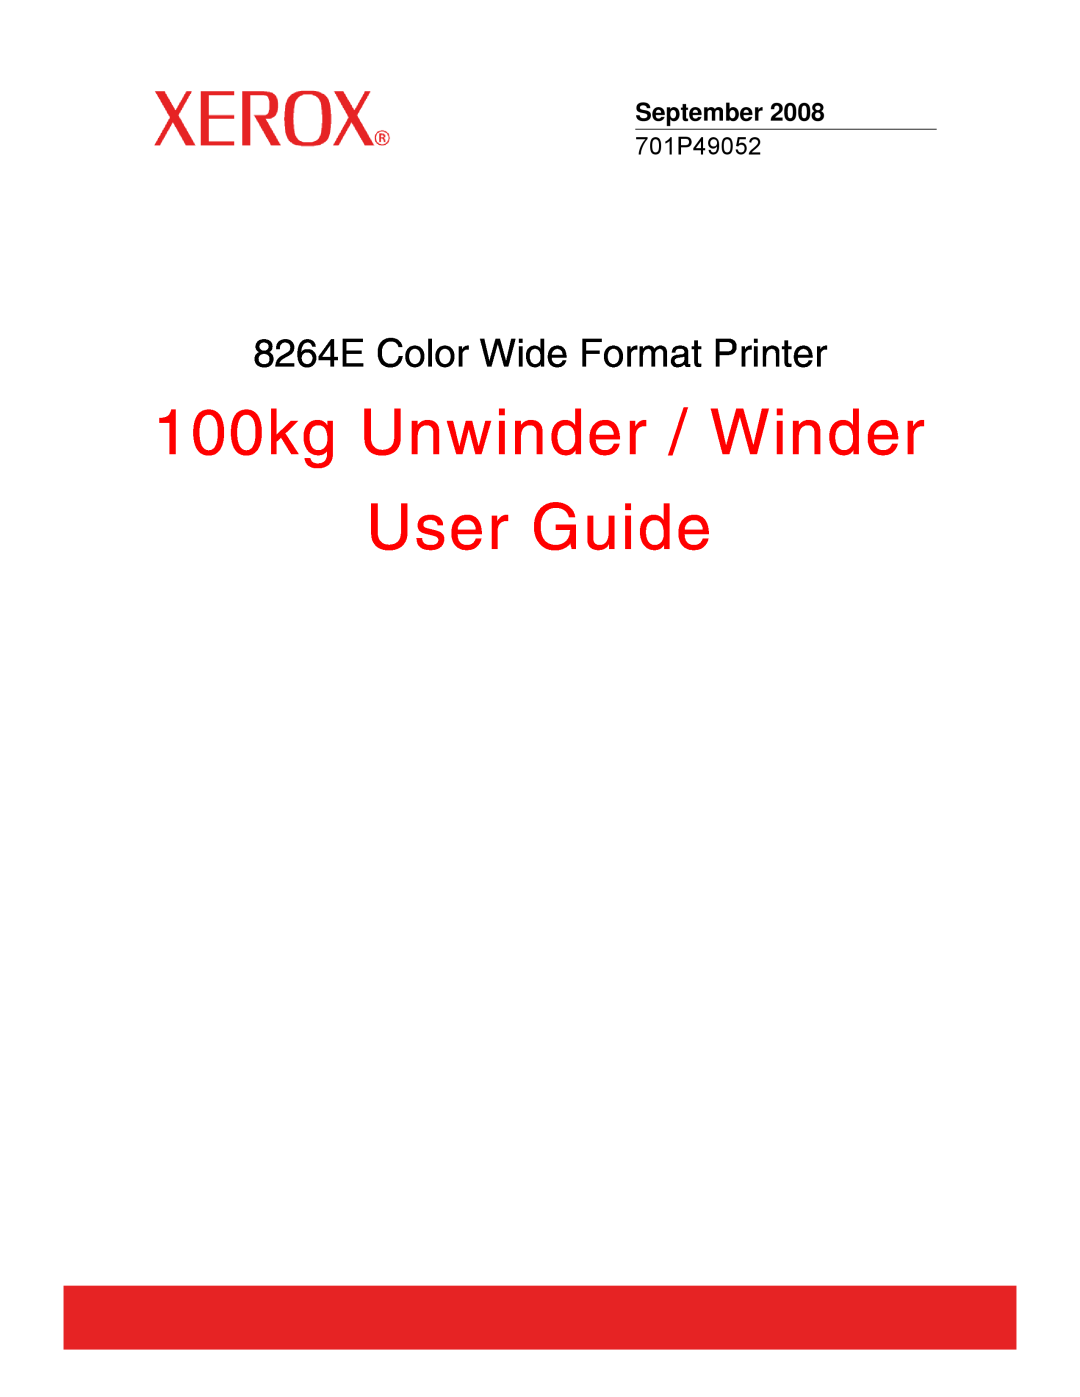 Xerox 8254E manual 701P49052, 100kg Unwinder / Winder User Guide, 8264E Color Wide Format Printer, September 